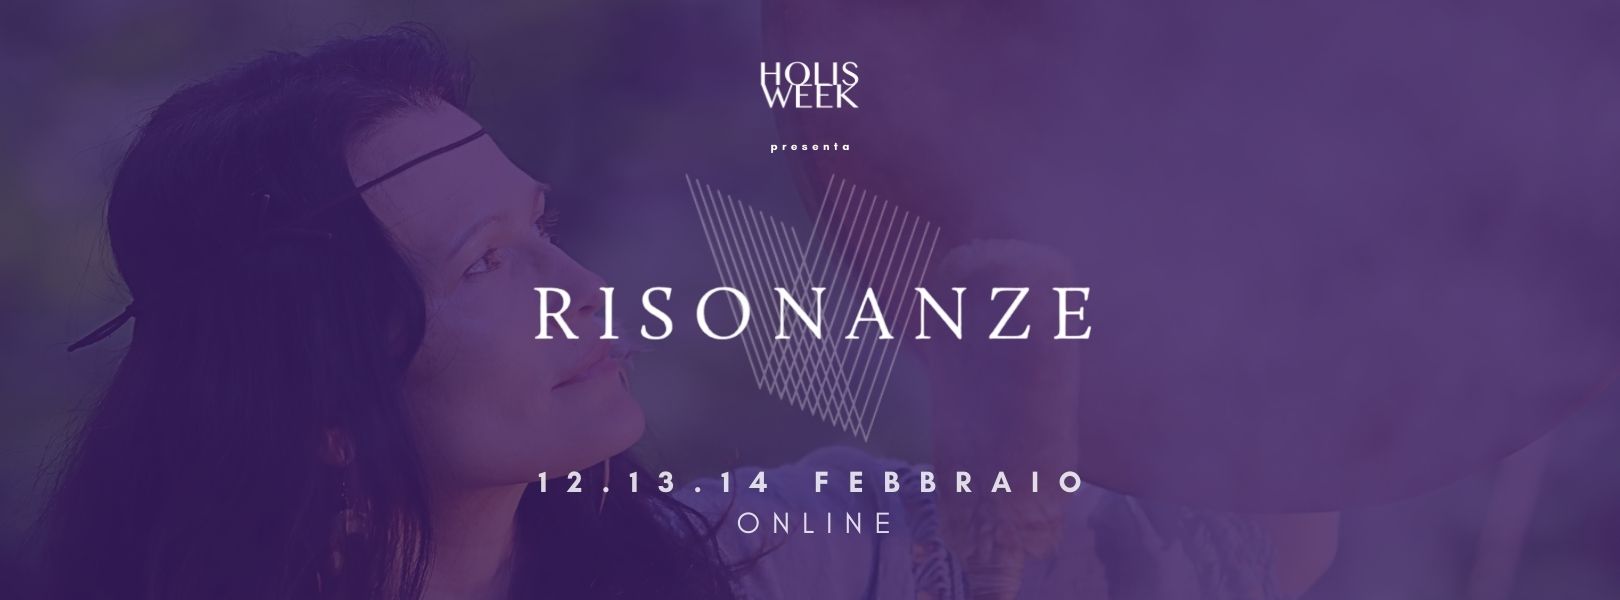 Risonanze by Holis Week